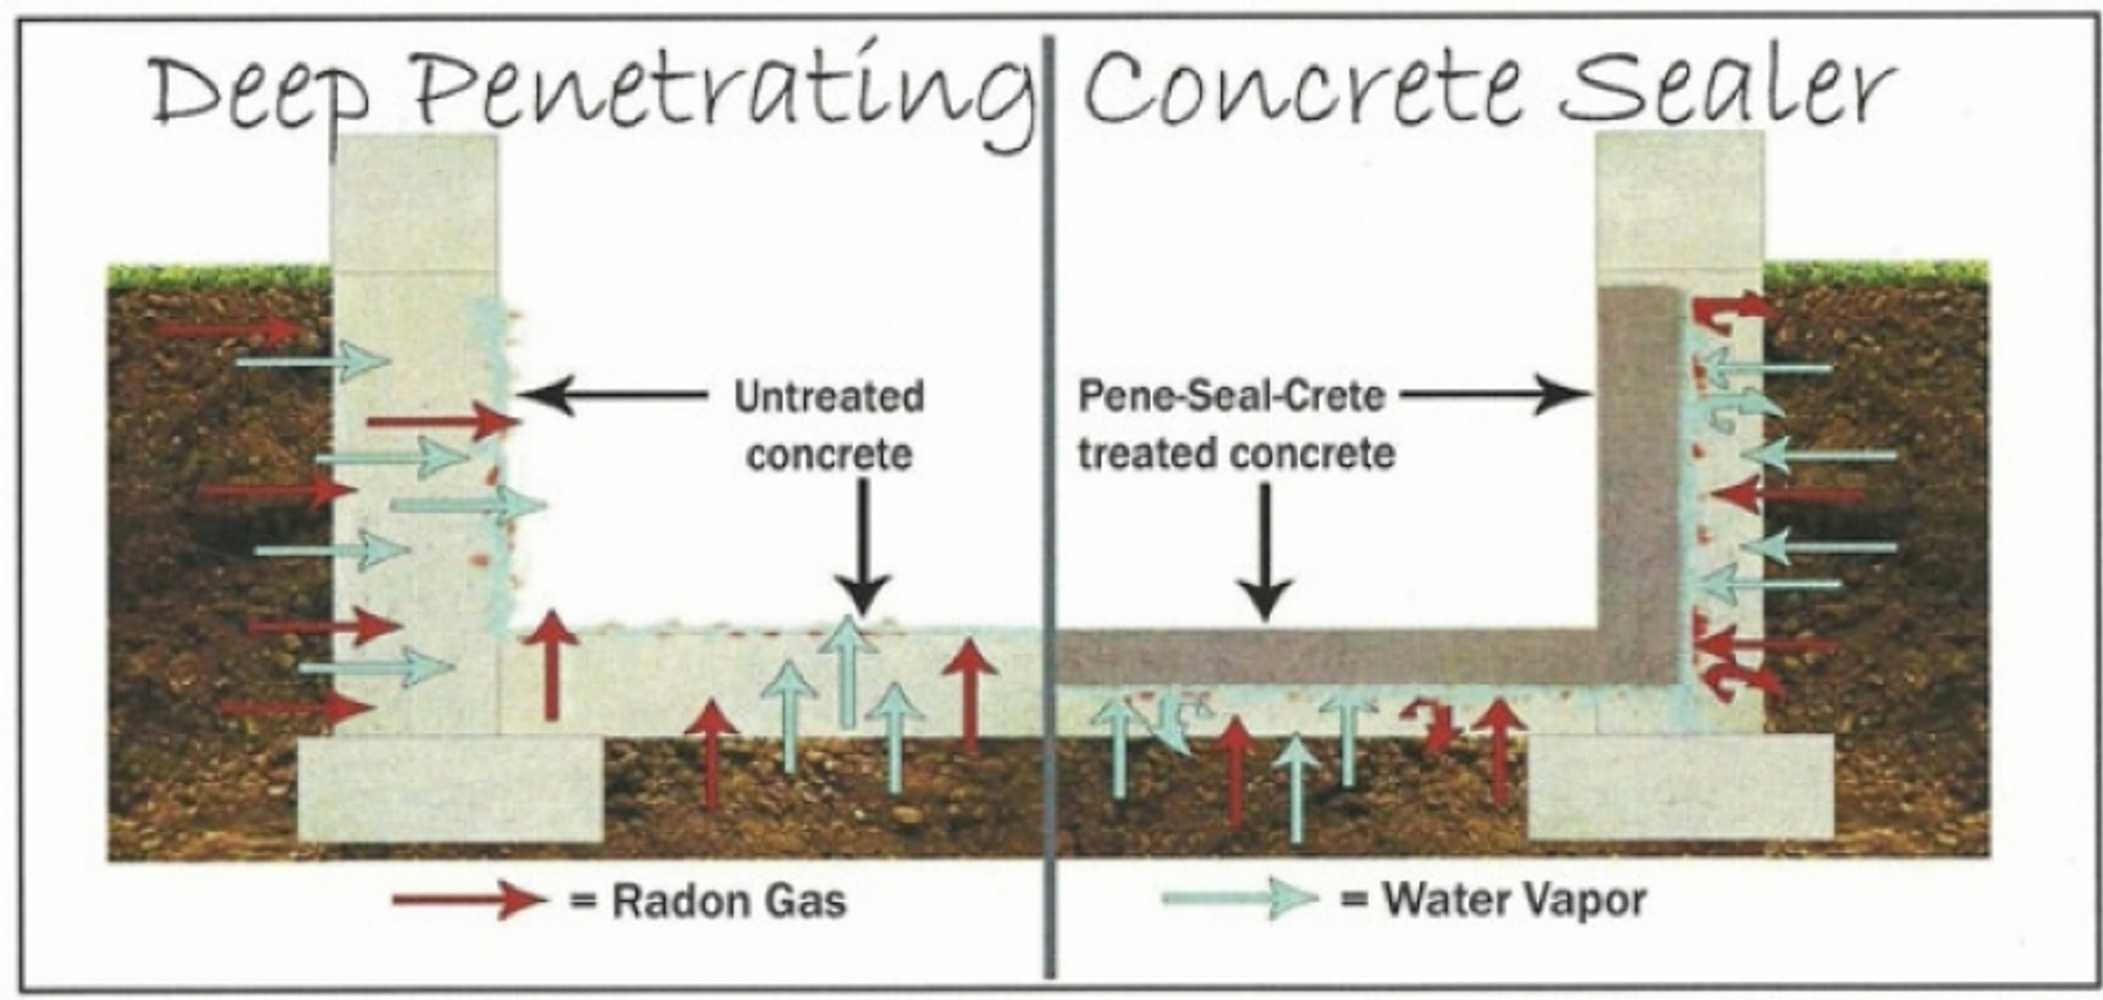 Deep Penetrating Concrete Sealer Diagram